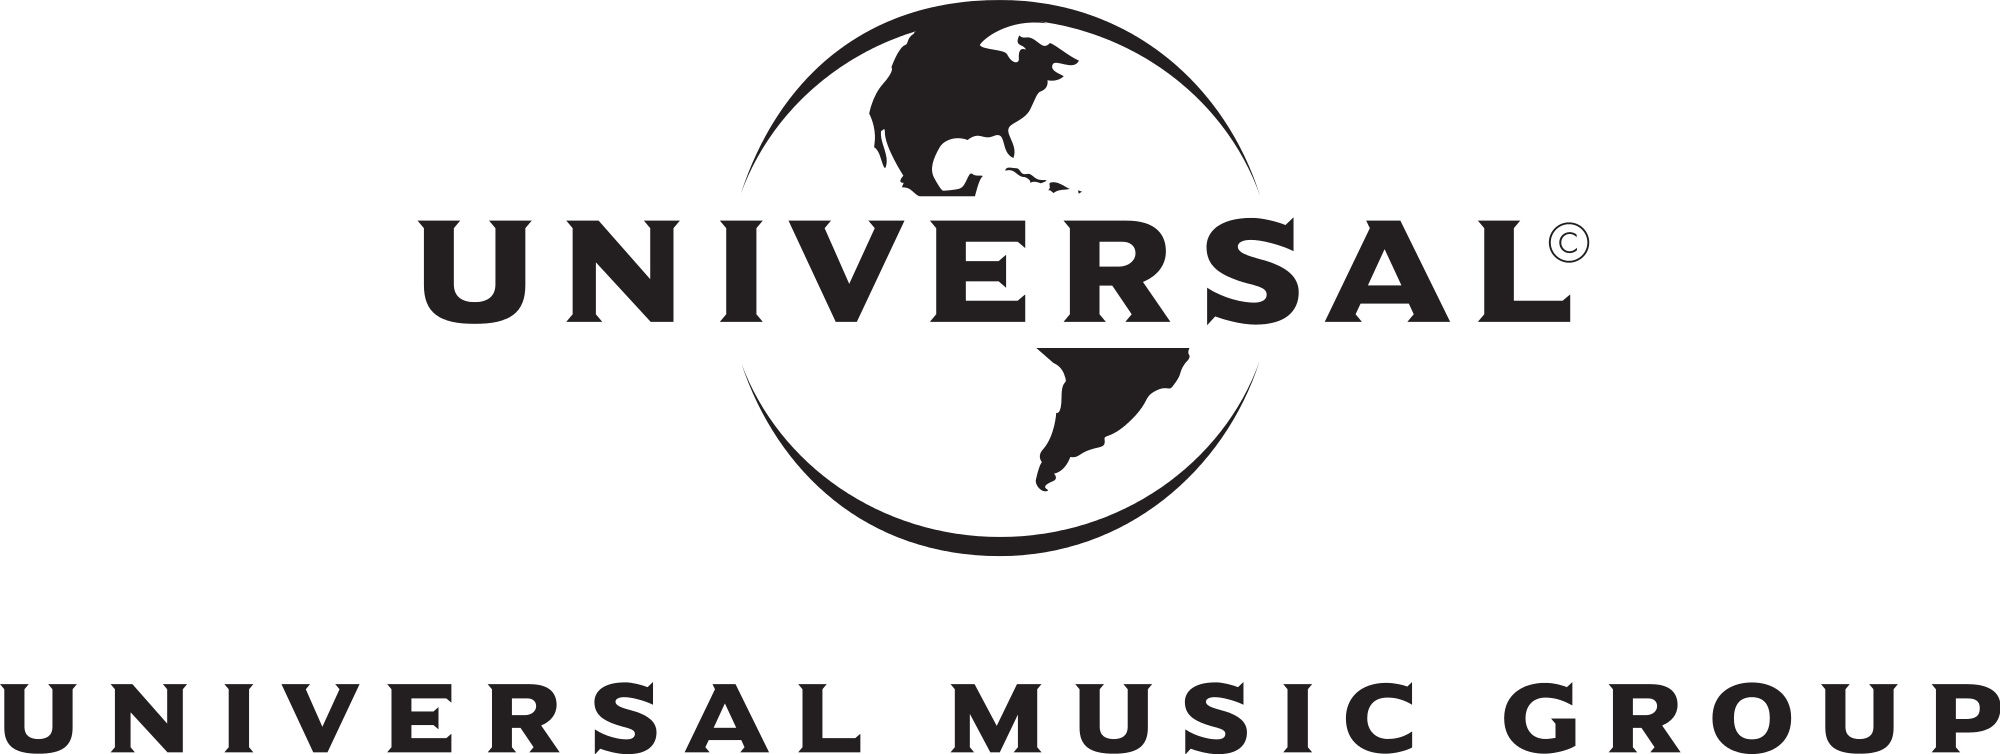 Universal Music posts 12.7% leap in Q1 revenues, sues Prince estate